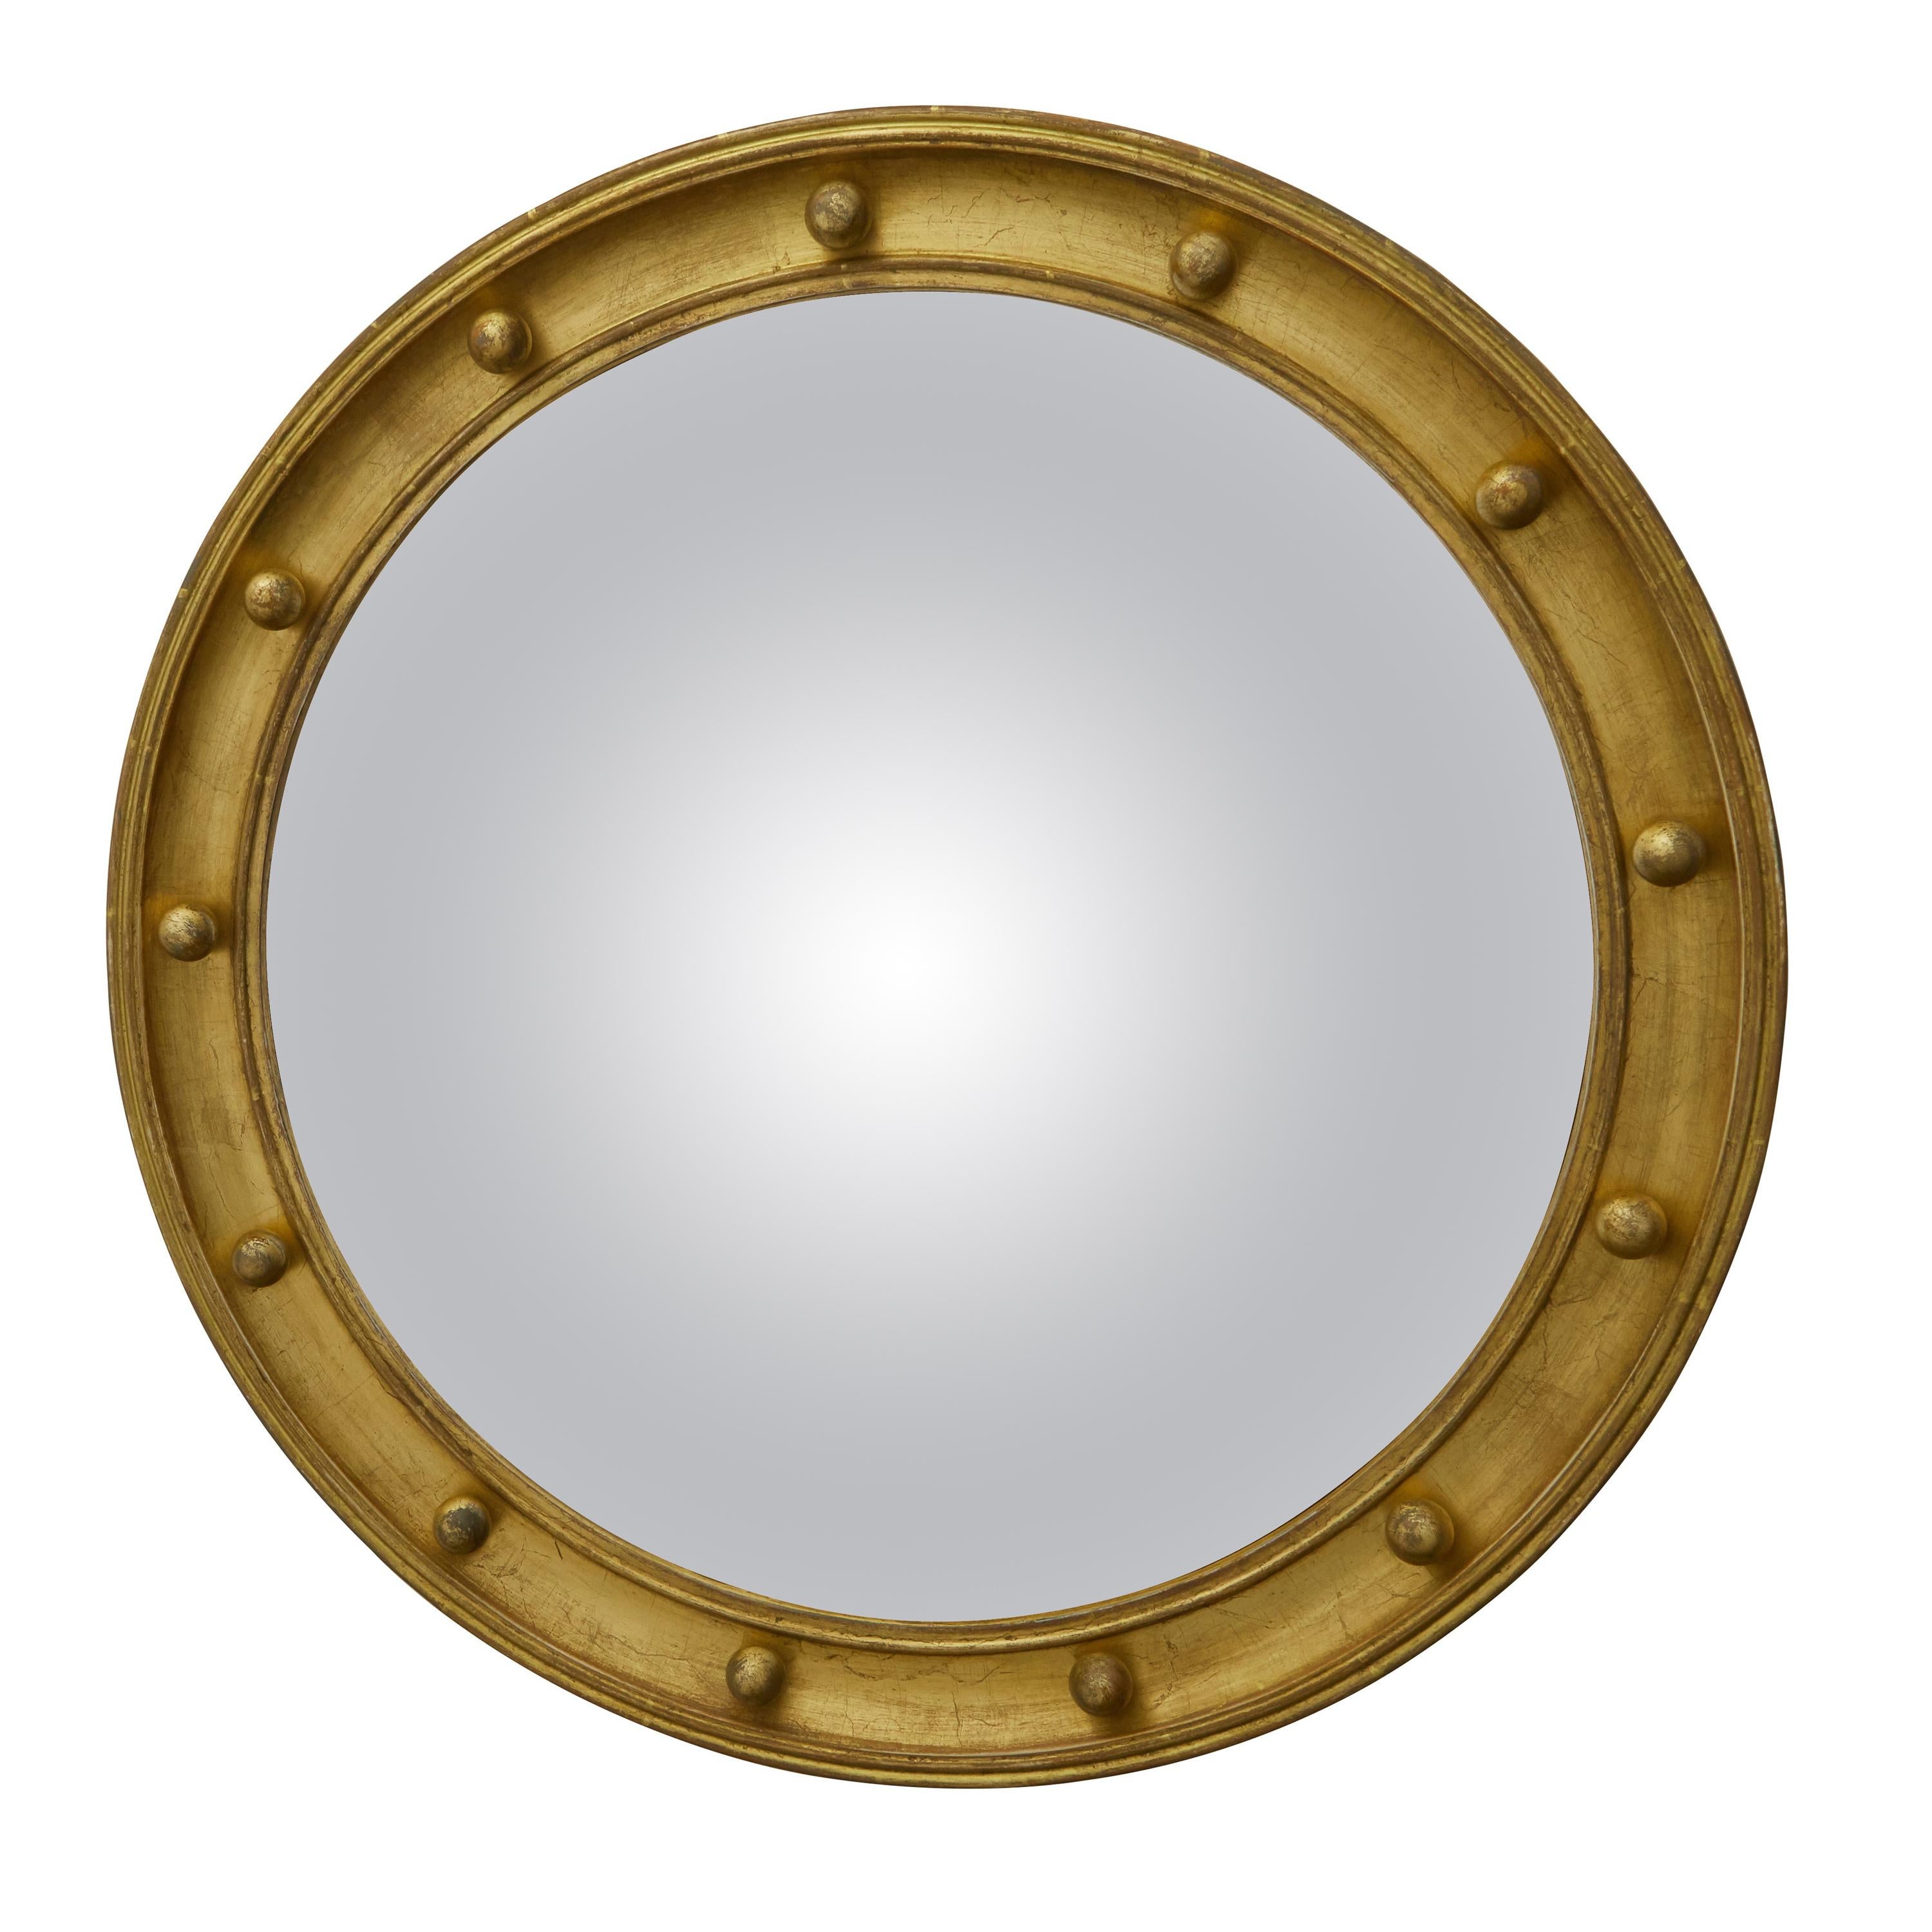 English 1920s-1930s Giltwood Bullseye Convex Girandole Mirror with Small Spheres